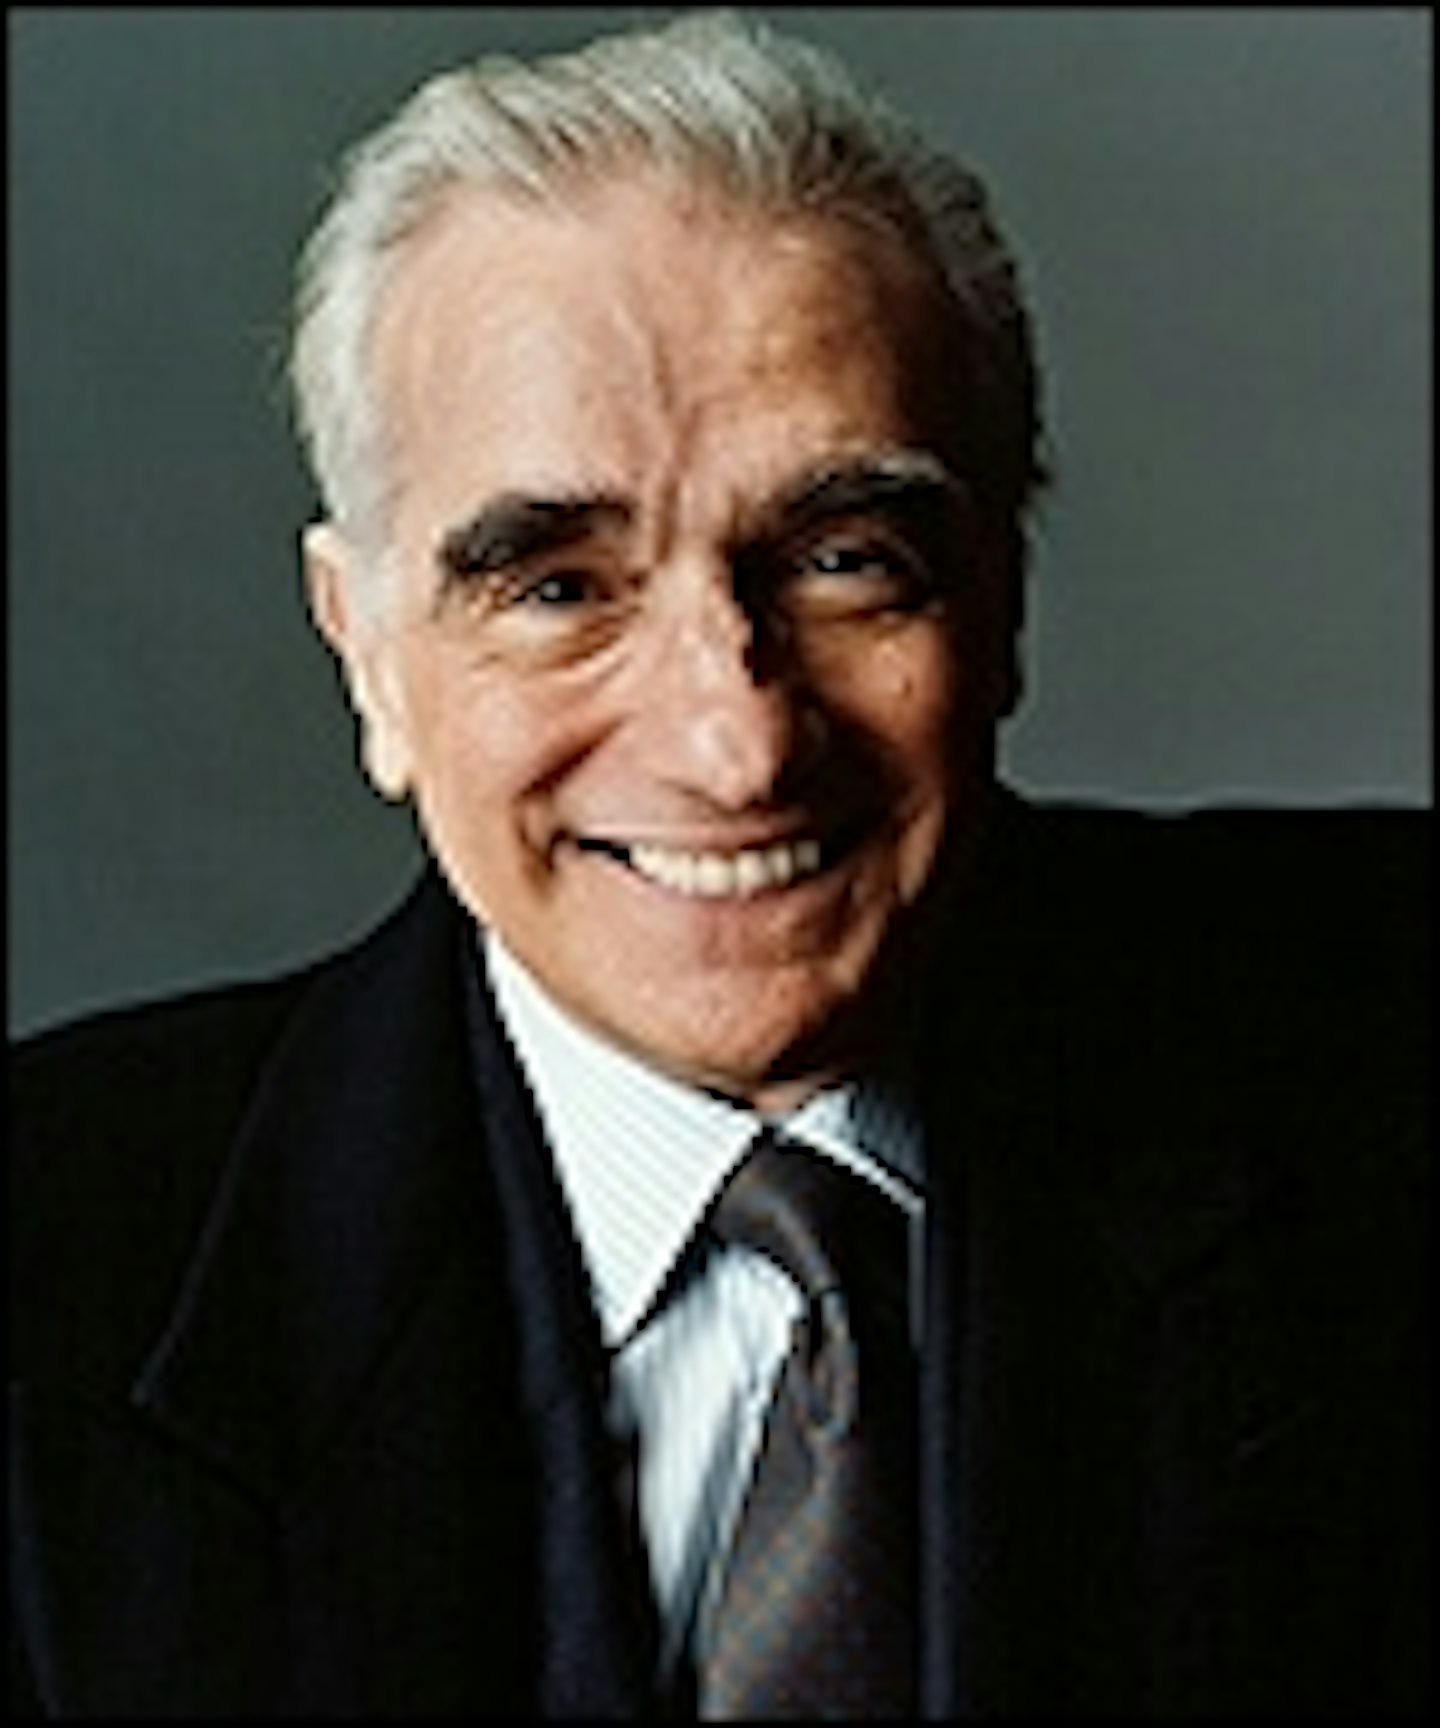 Scorsese Goes Digital, Abandons Film